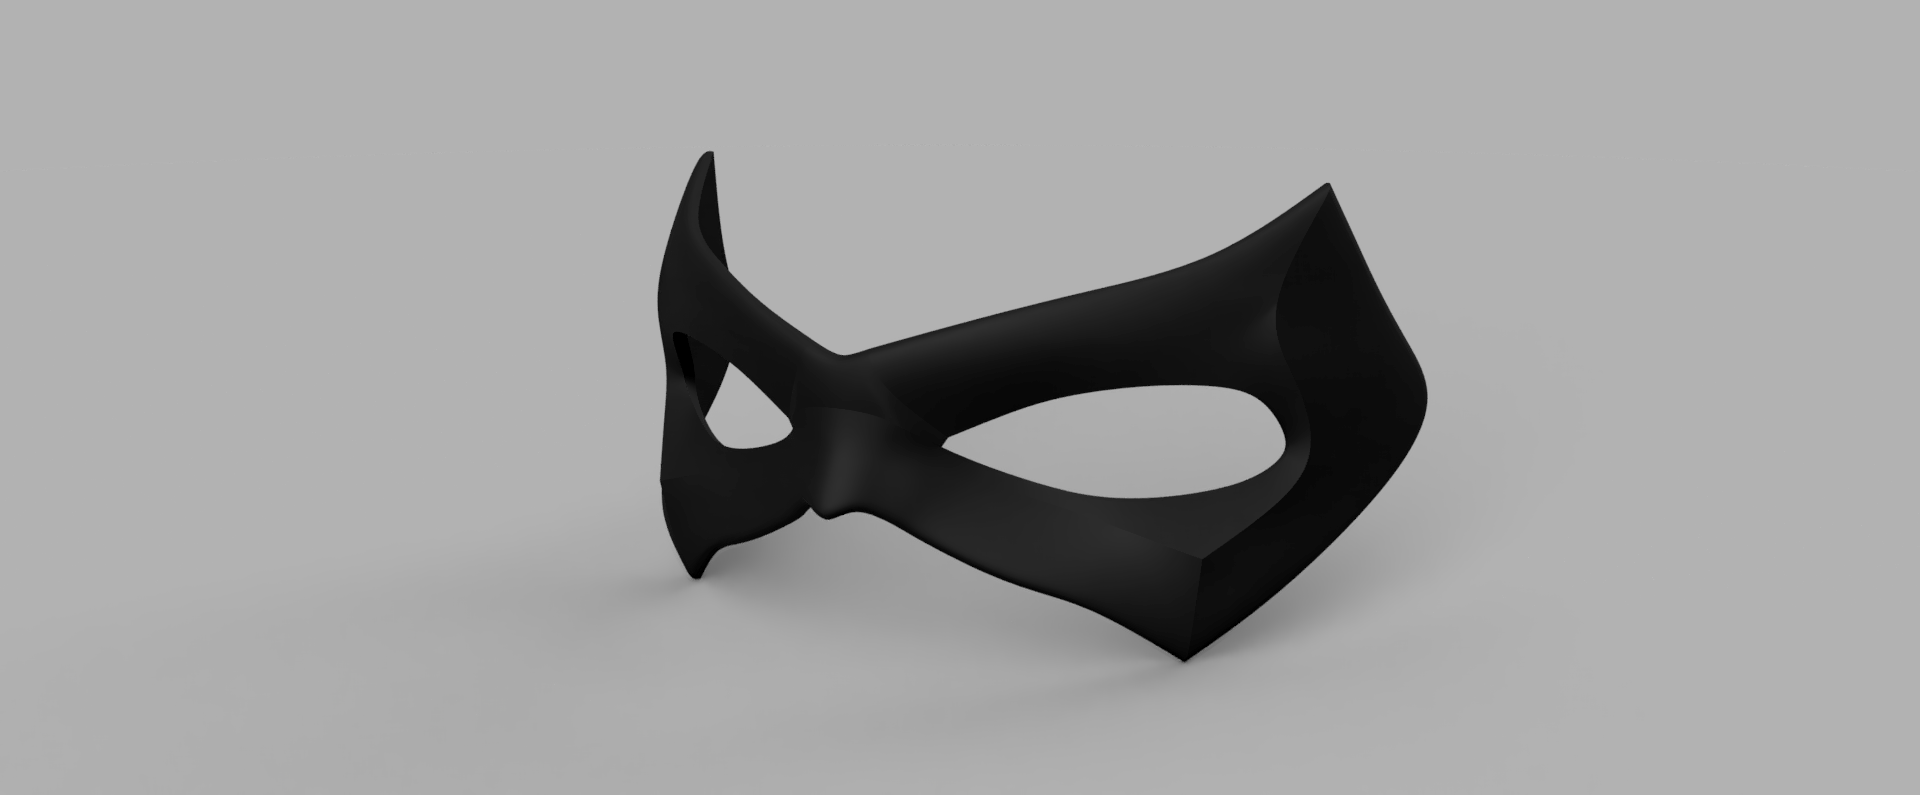 Arkham Knight Robin Mask.png Download STL file Arkham Knight Robin Mask • 3D print object, VillainousPropShop